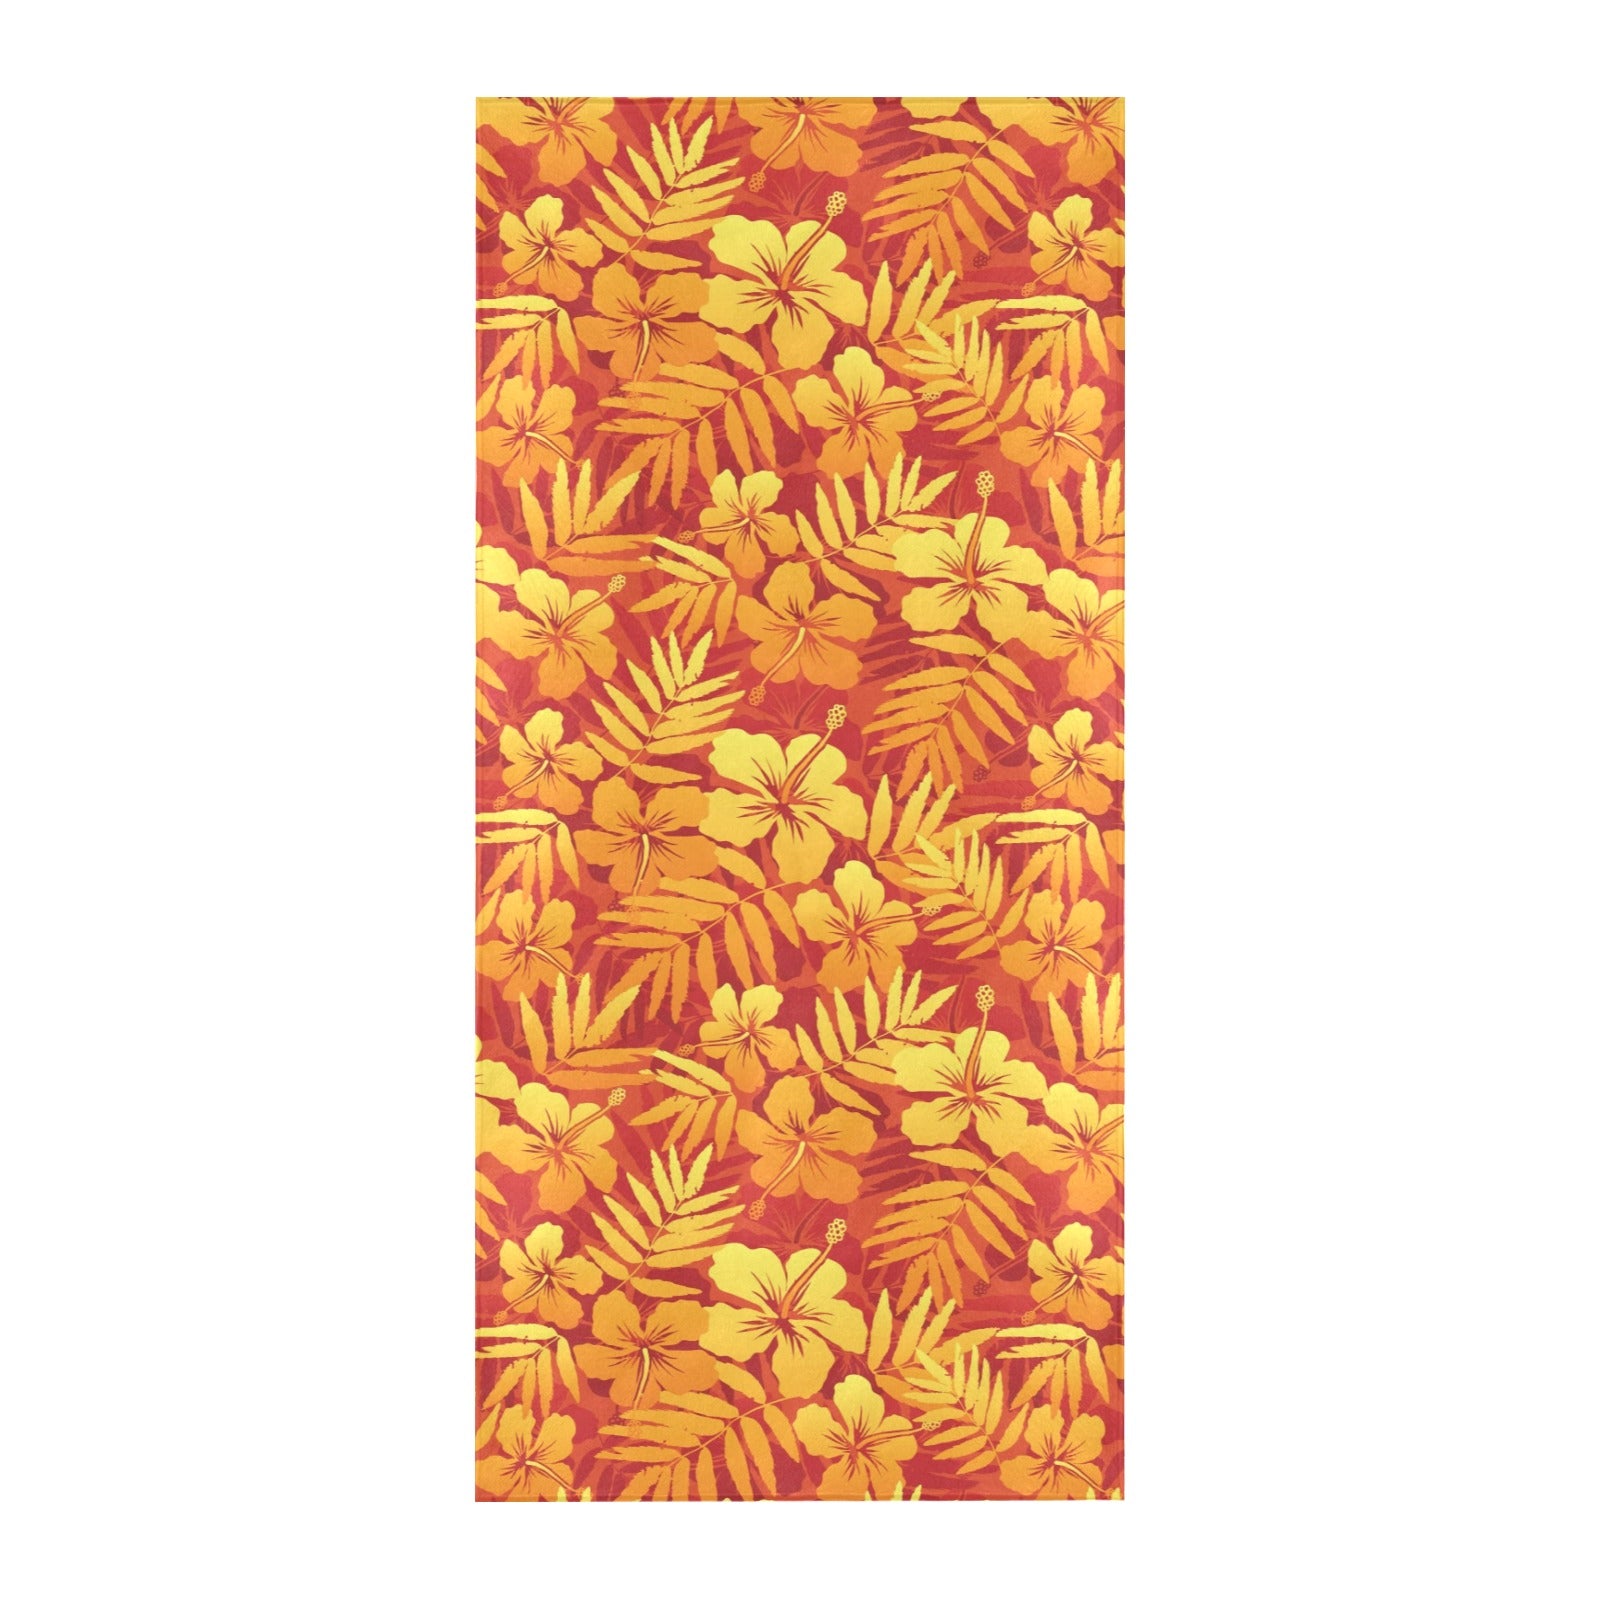 Hibiscus Summer Print Design LKS302 Beach Towel 32" x 71"